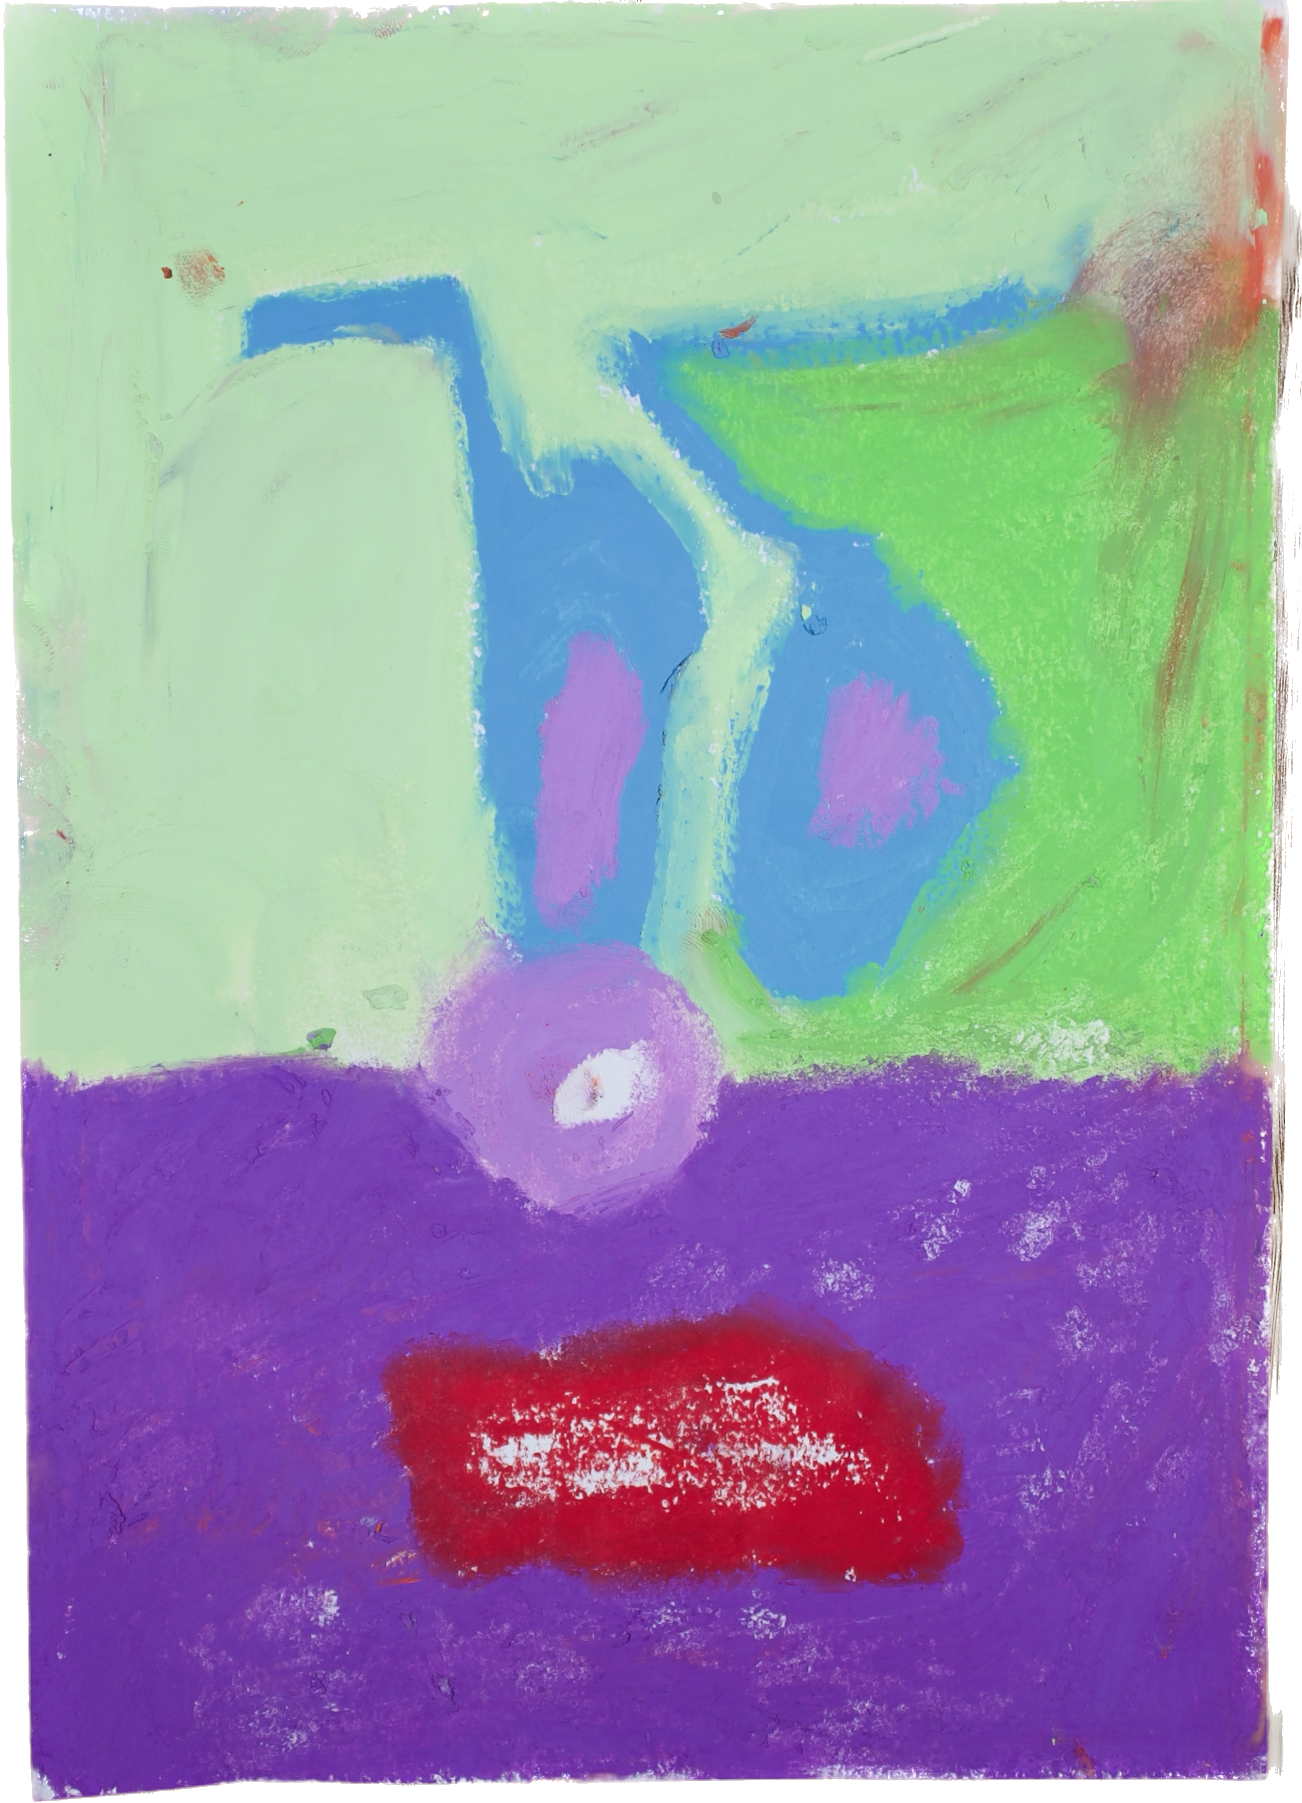 Lenfantvivant modernist abstract artwork" "Sauna Fusion No. 112 with surreal influences" "Contemporary abstraction in vibrant colors" "Expressionist art piece by Lenfantvivant" "Color field exploration on paper by Lenfantvivant"